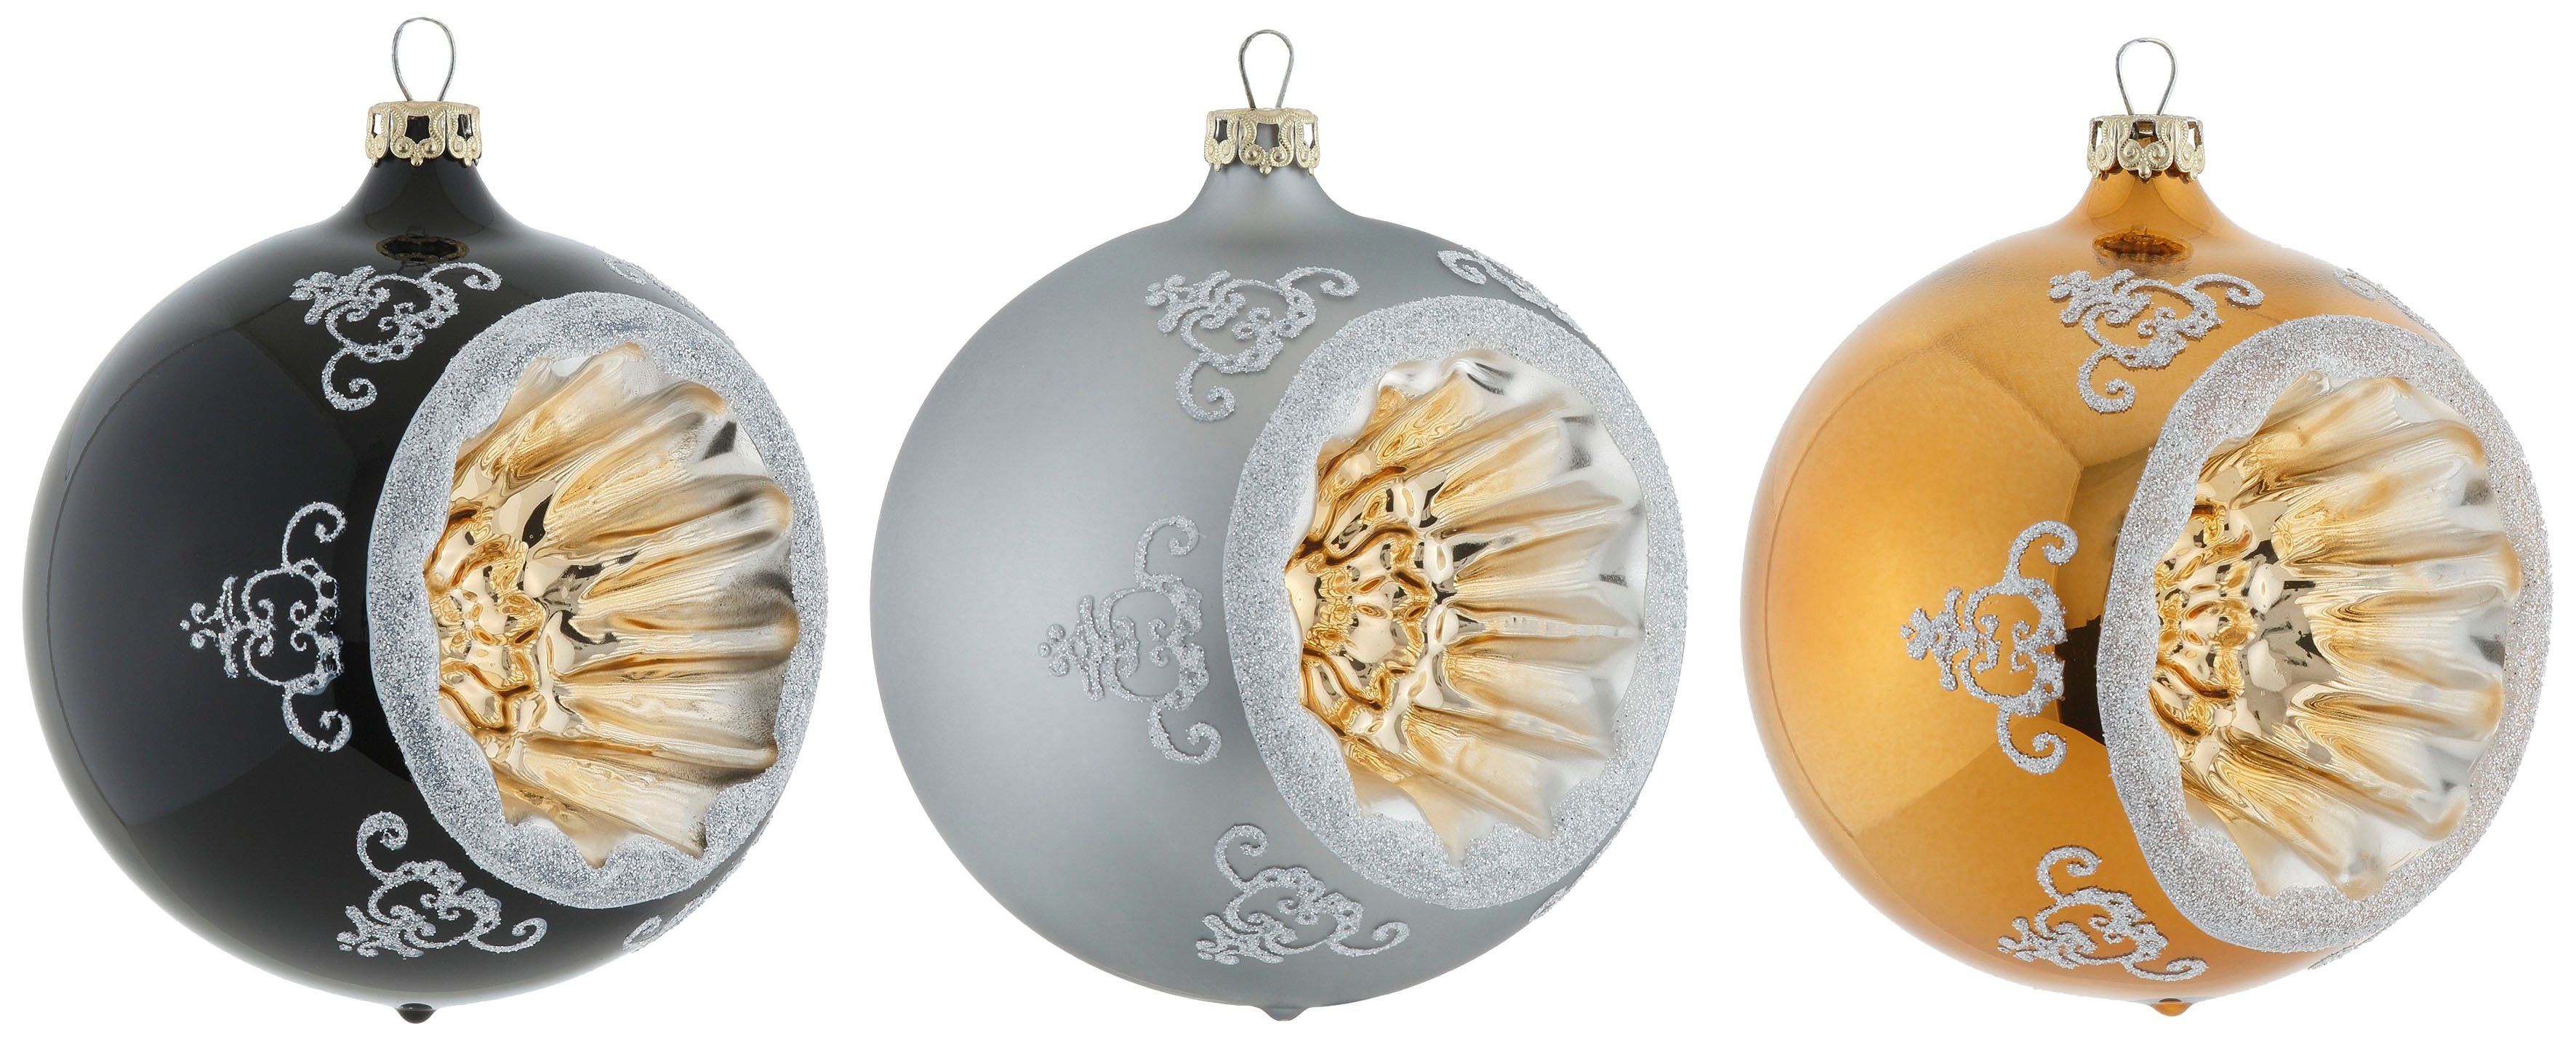 Refelexkugeln (3 Weihnachtsbaumkugel Thüringer St), Glas, Christbaumschmuck Black&White&Gold, Glasdesign aus Christbaumkugeln hochwertige Weihnachtsdeko,